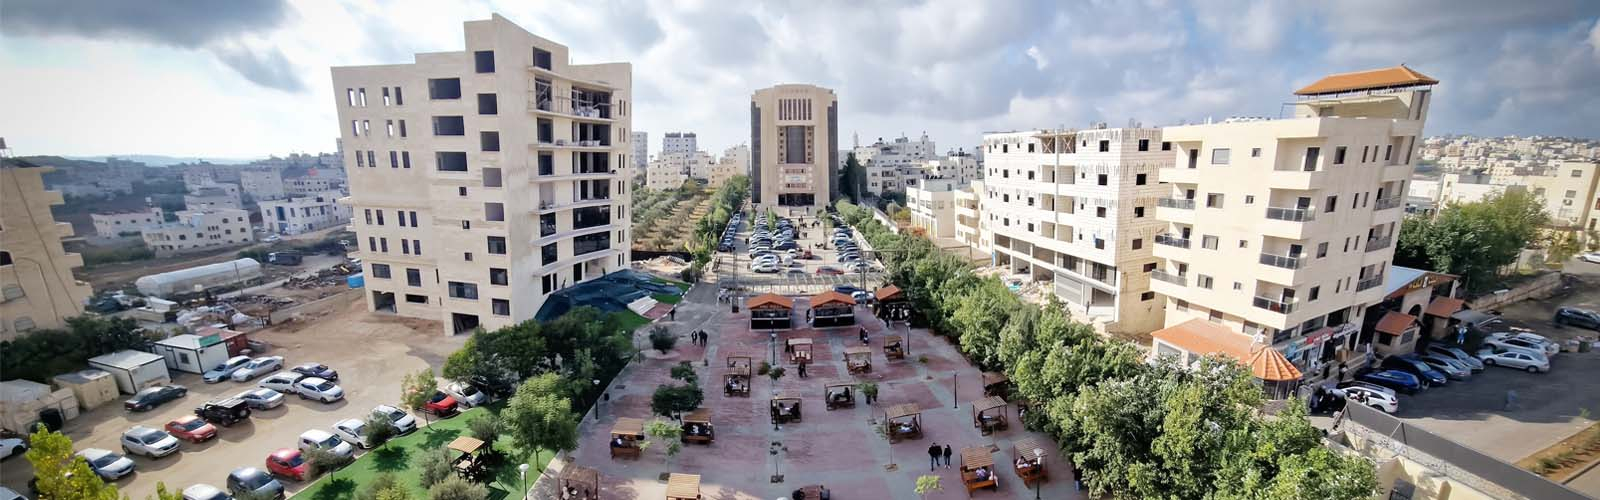 Palestine Polytechnic University (PPU) - جامعة بوليتكنك فبسطين